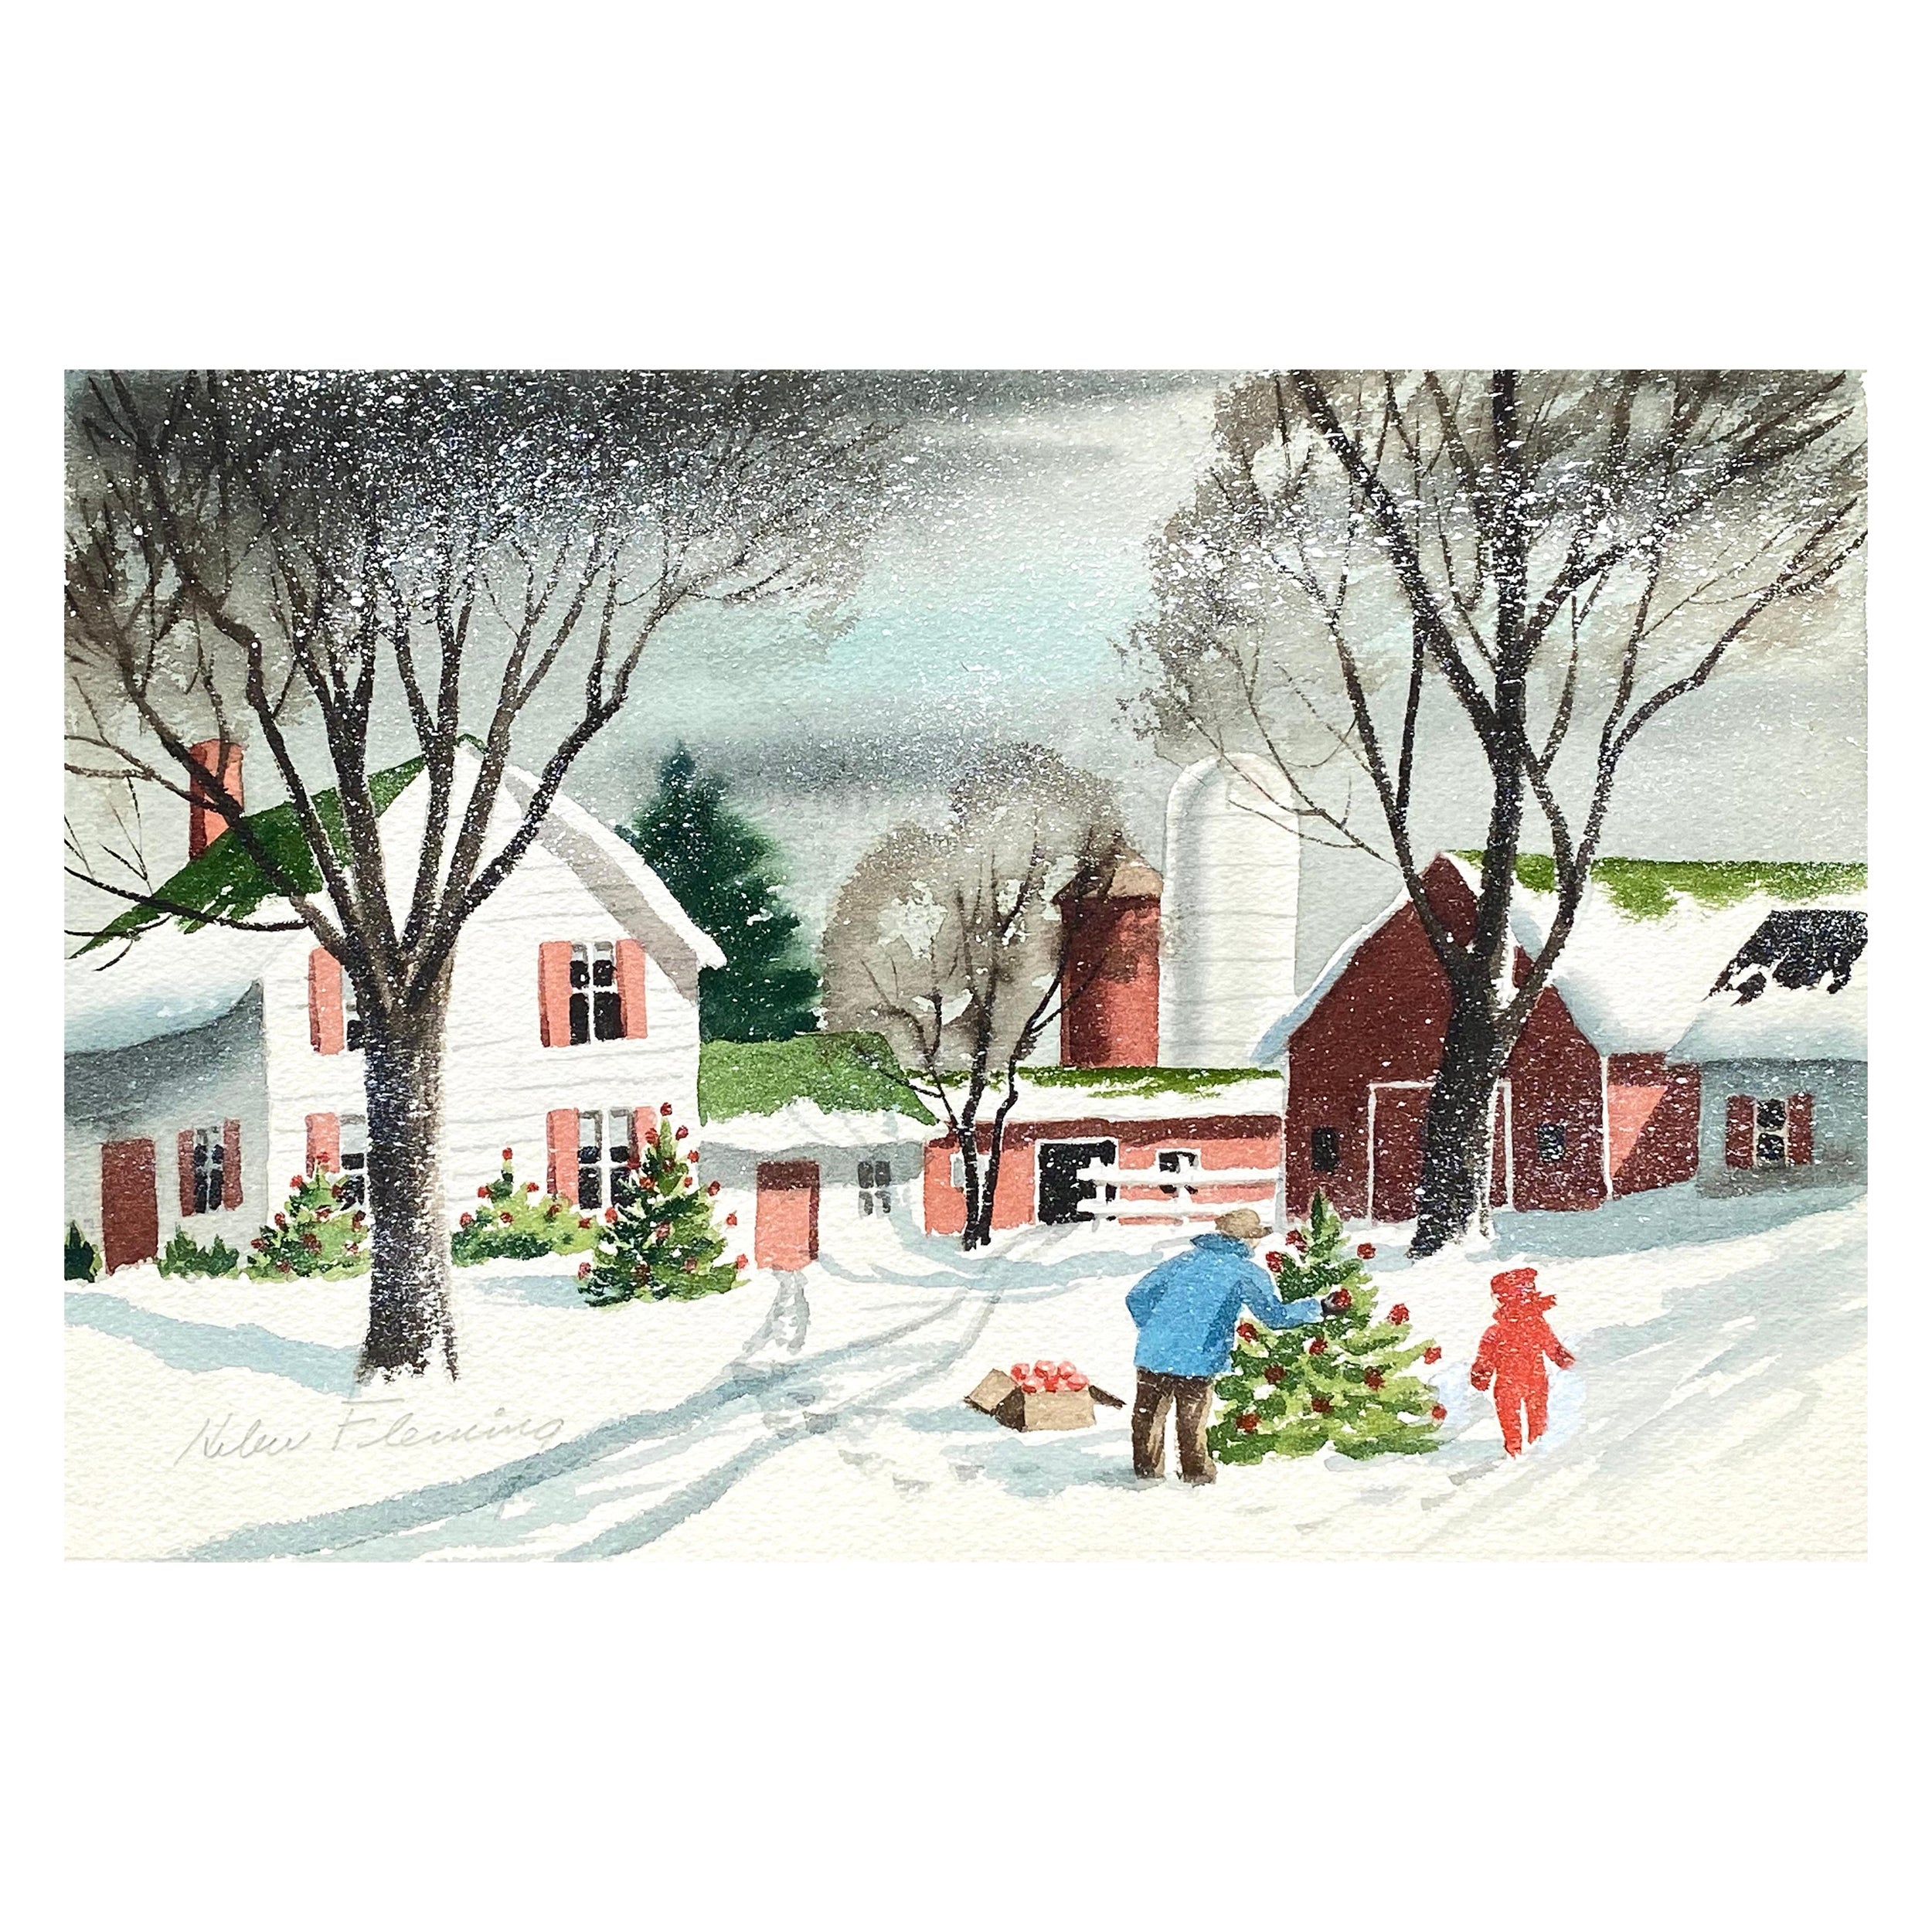 Helen Fleming Figurative Art - “Outdoor Christmas Trees”